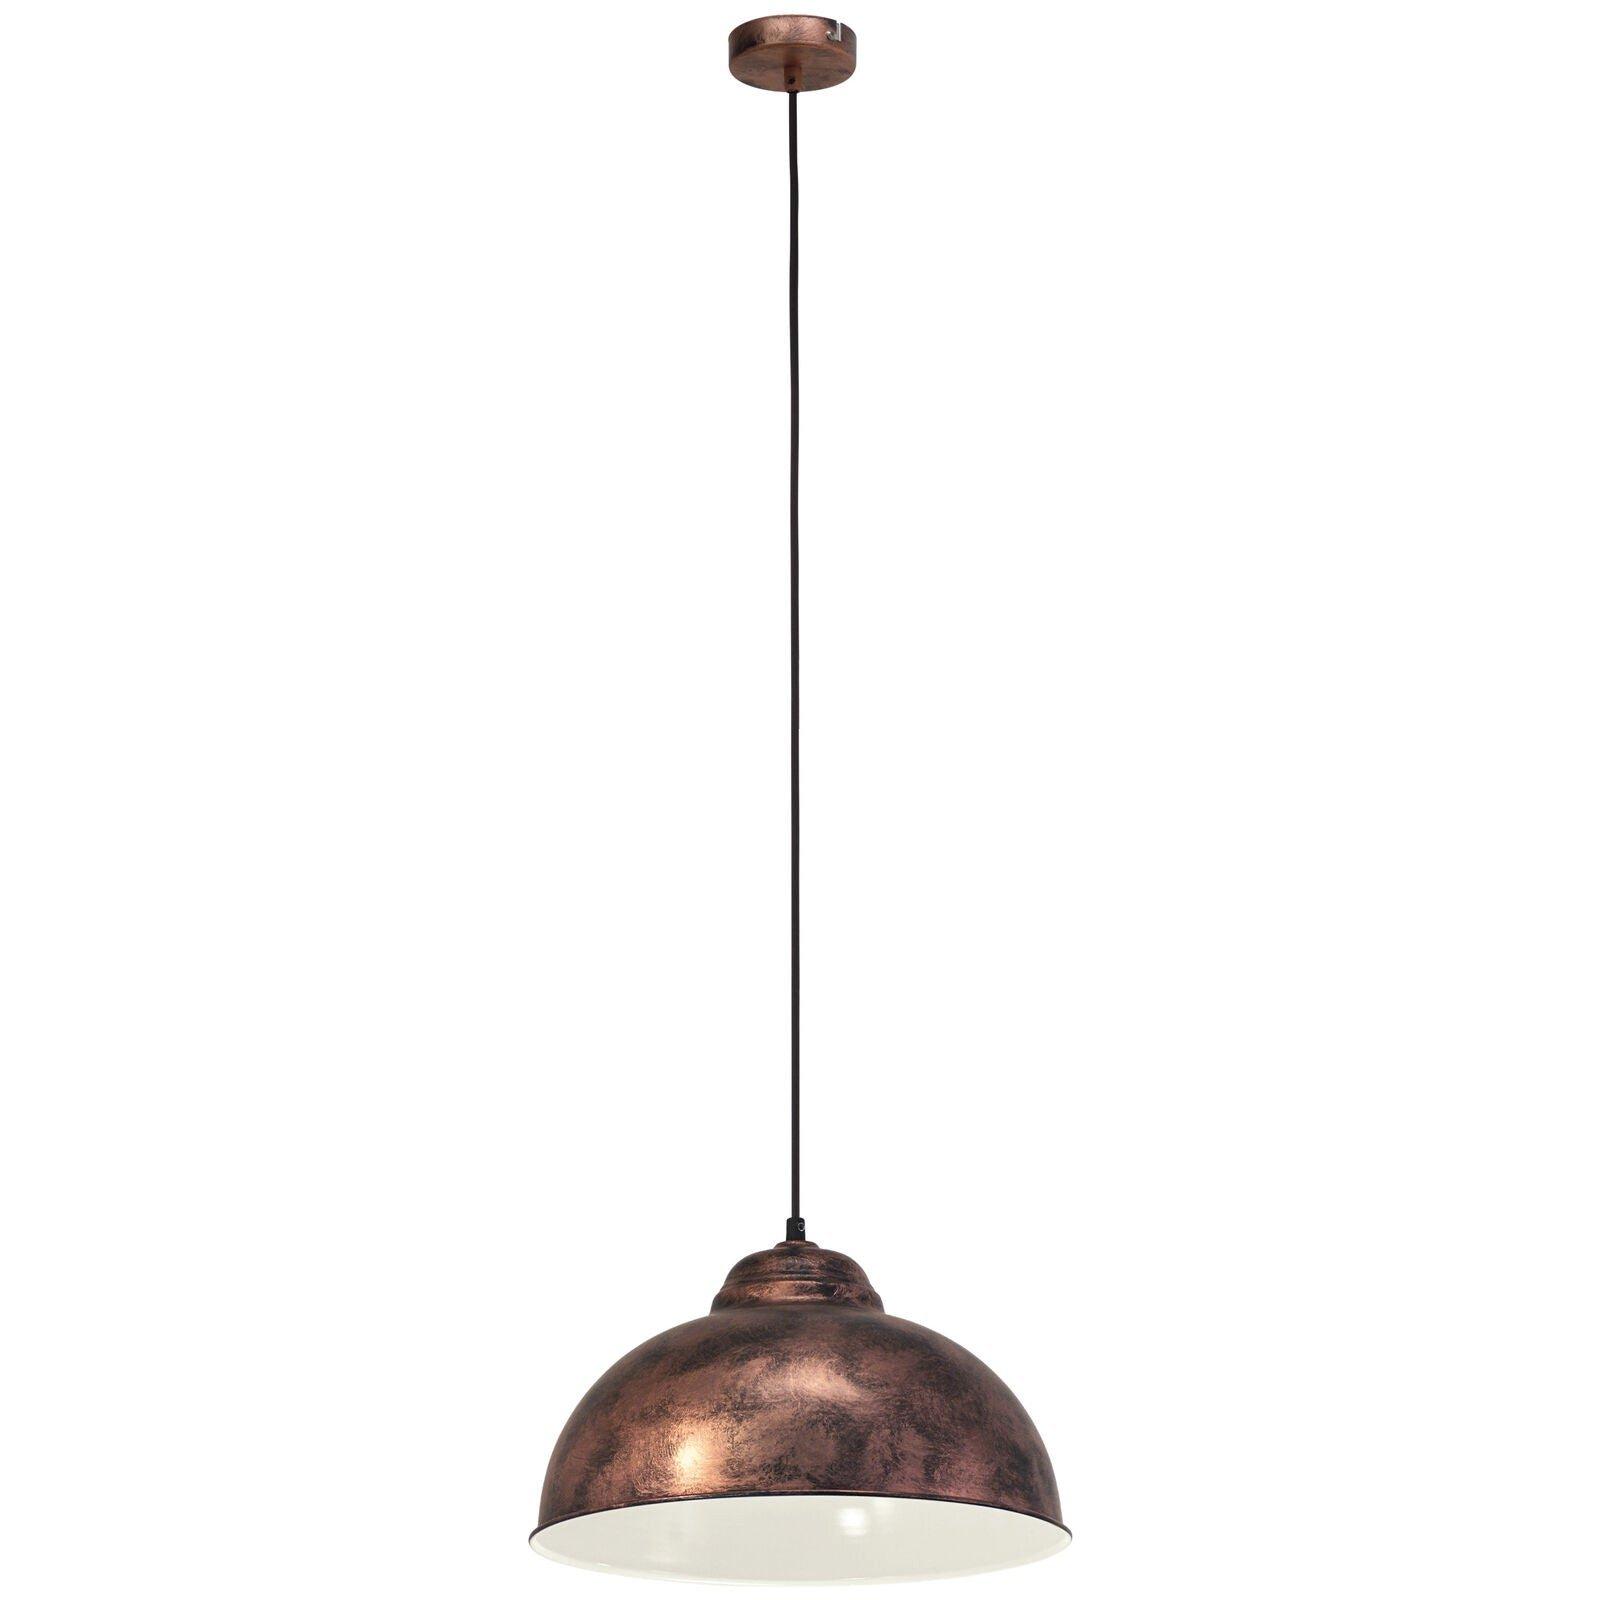 Hanging Ceiling Pendant Light Antique Copper Dome Bowl Shade 1 x 60W E27 Bulb